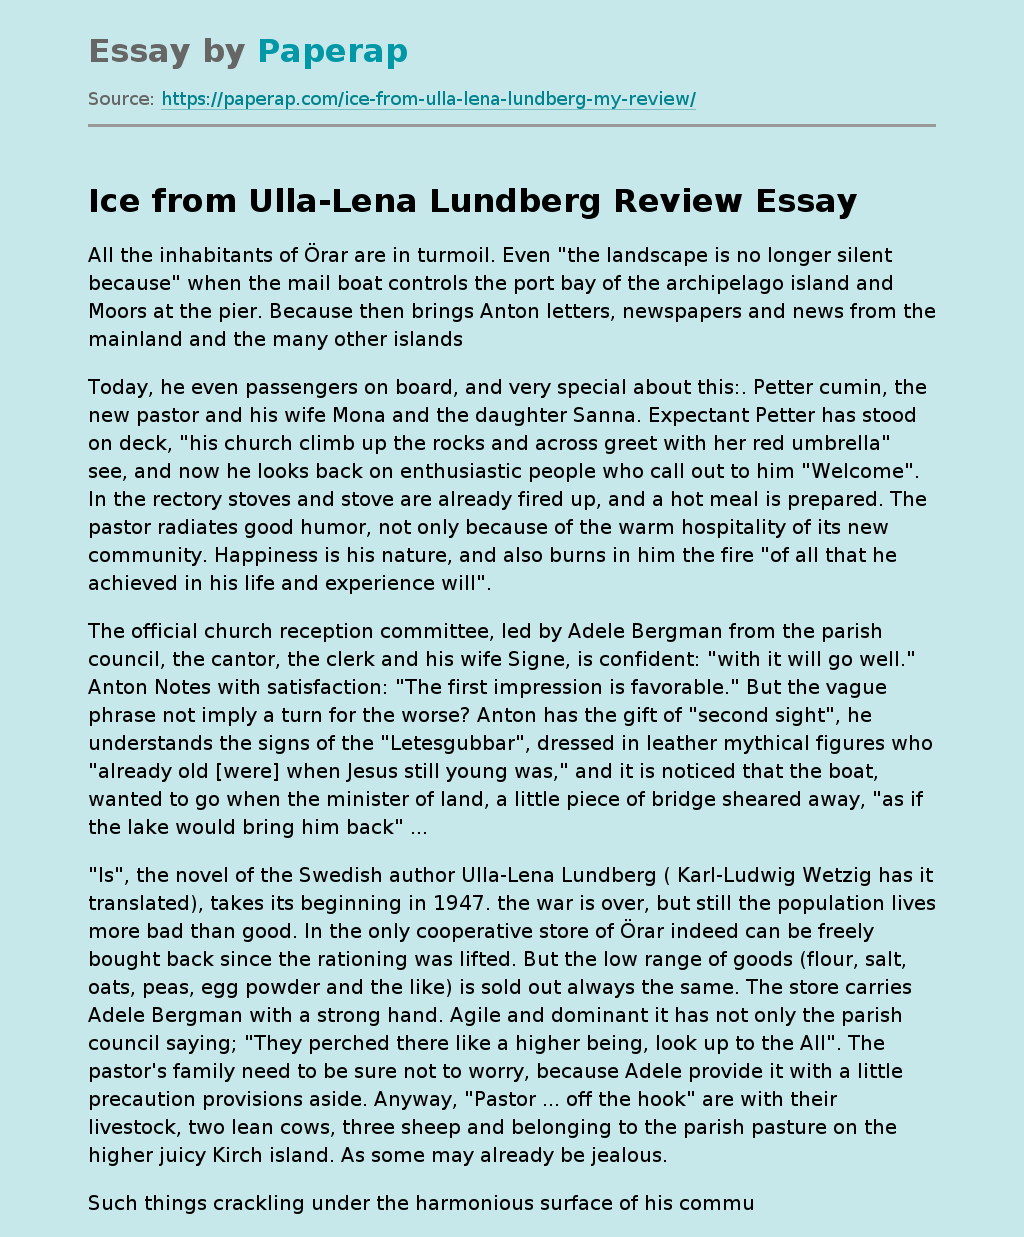 Novel "Ice" from Ulla-Lena Lundberg